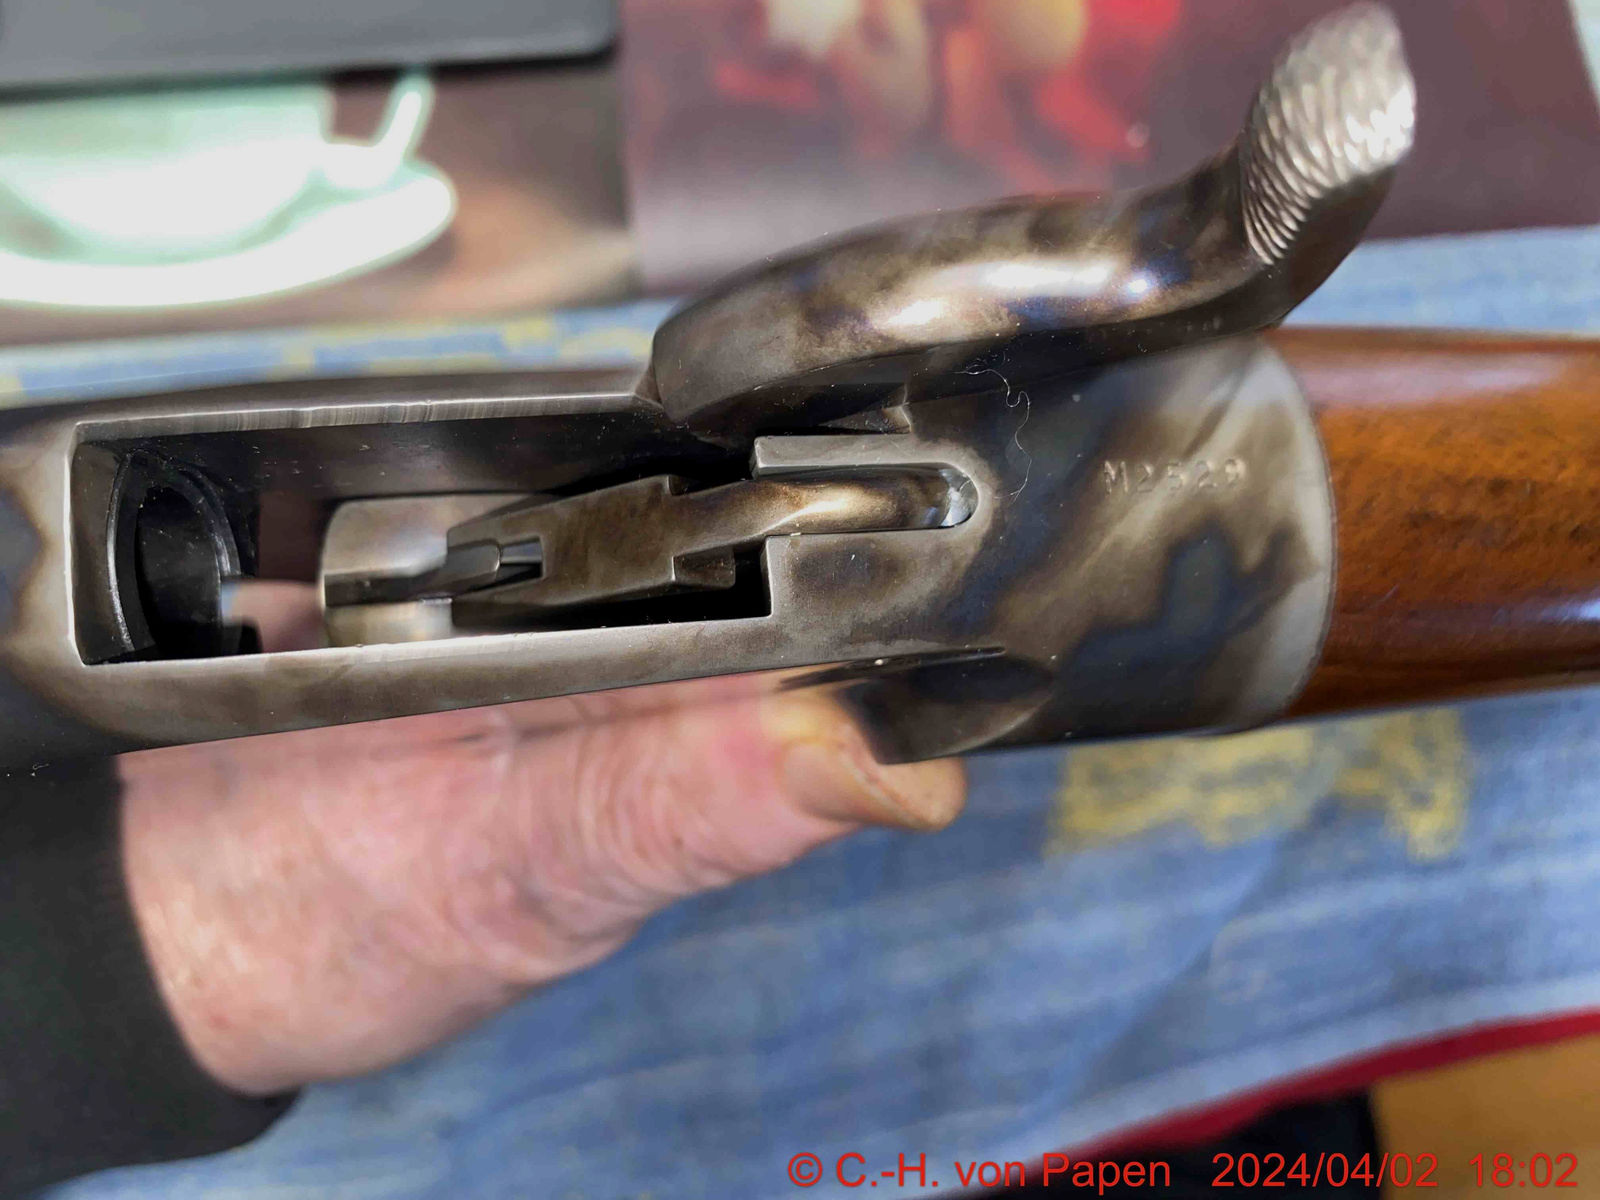 1860 Spencer Rifle .56-50 3 Bands